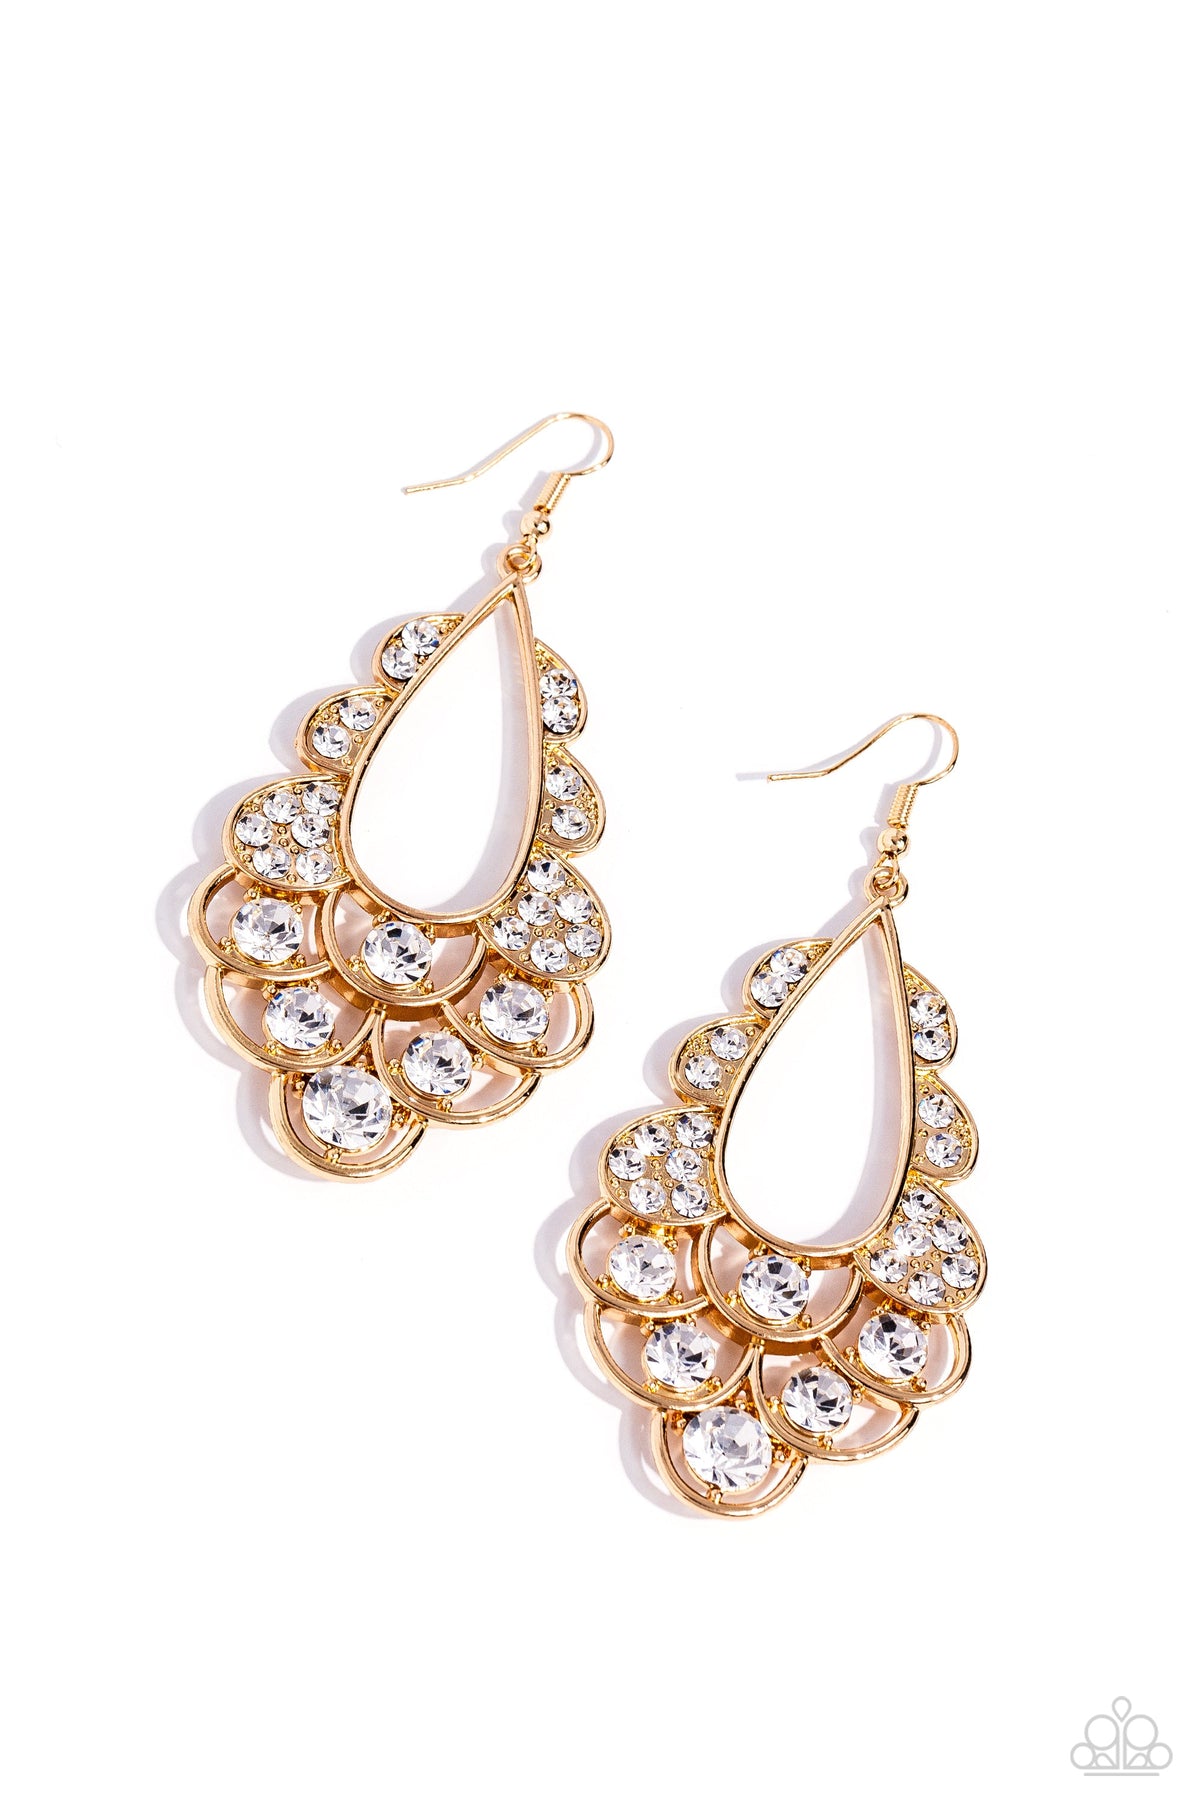 Majestic Masquerade Gold &amp; White Rhinestone Earrings - Paparazzi Accessories- lightbox - CarasShop.com - $5 Jewelry by Cara Jewels